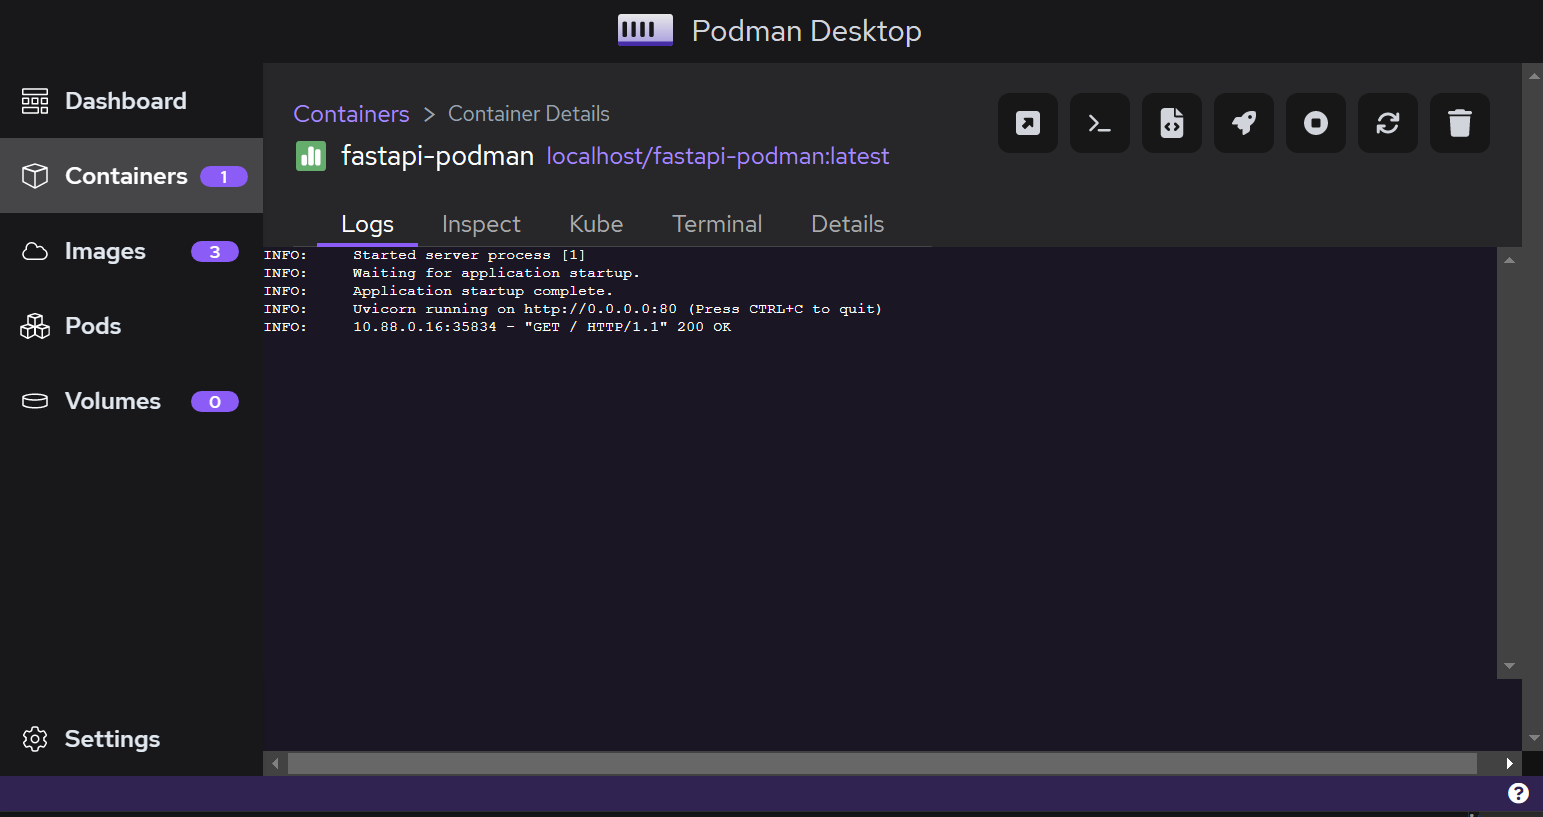 Podman Desktop showing FastAPI container logs